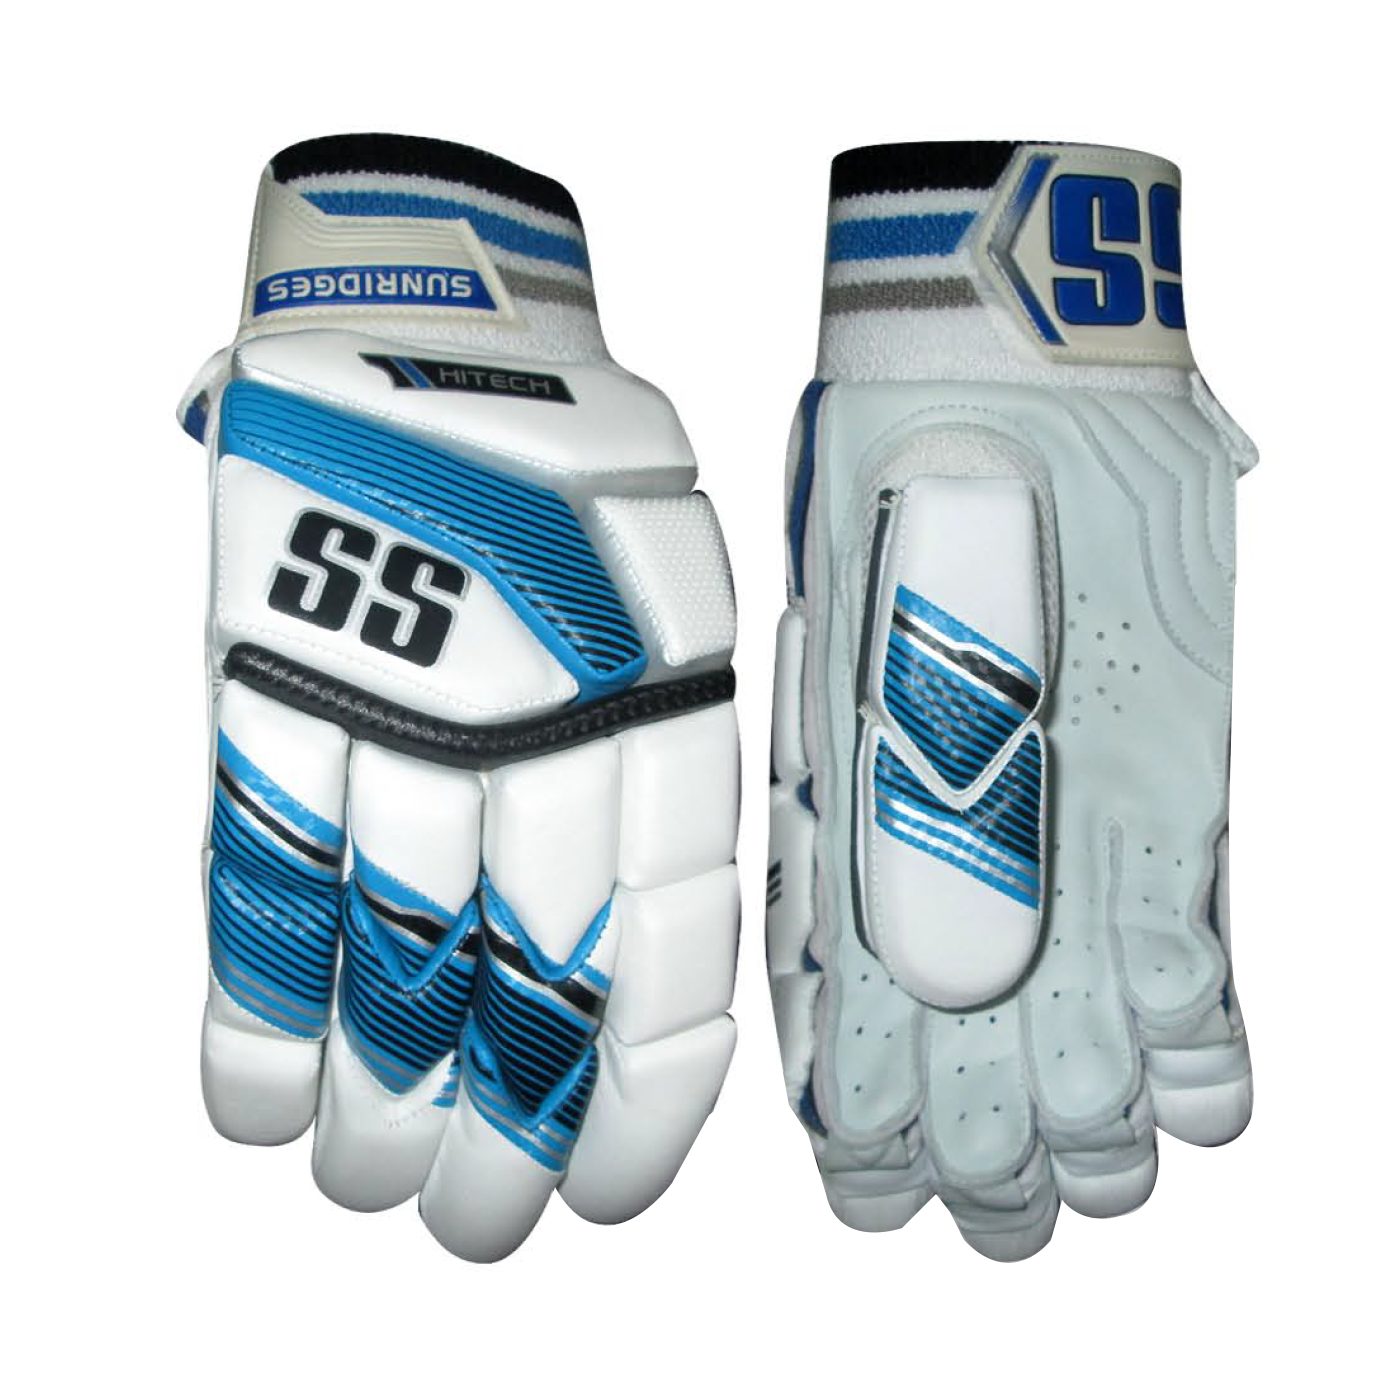 SS Cricket Gloves Pro Series